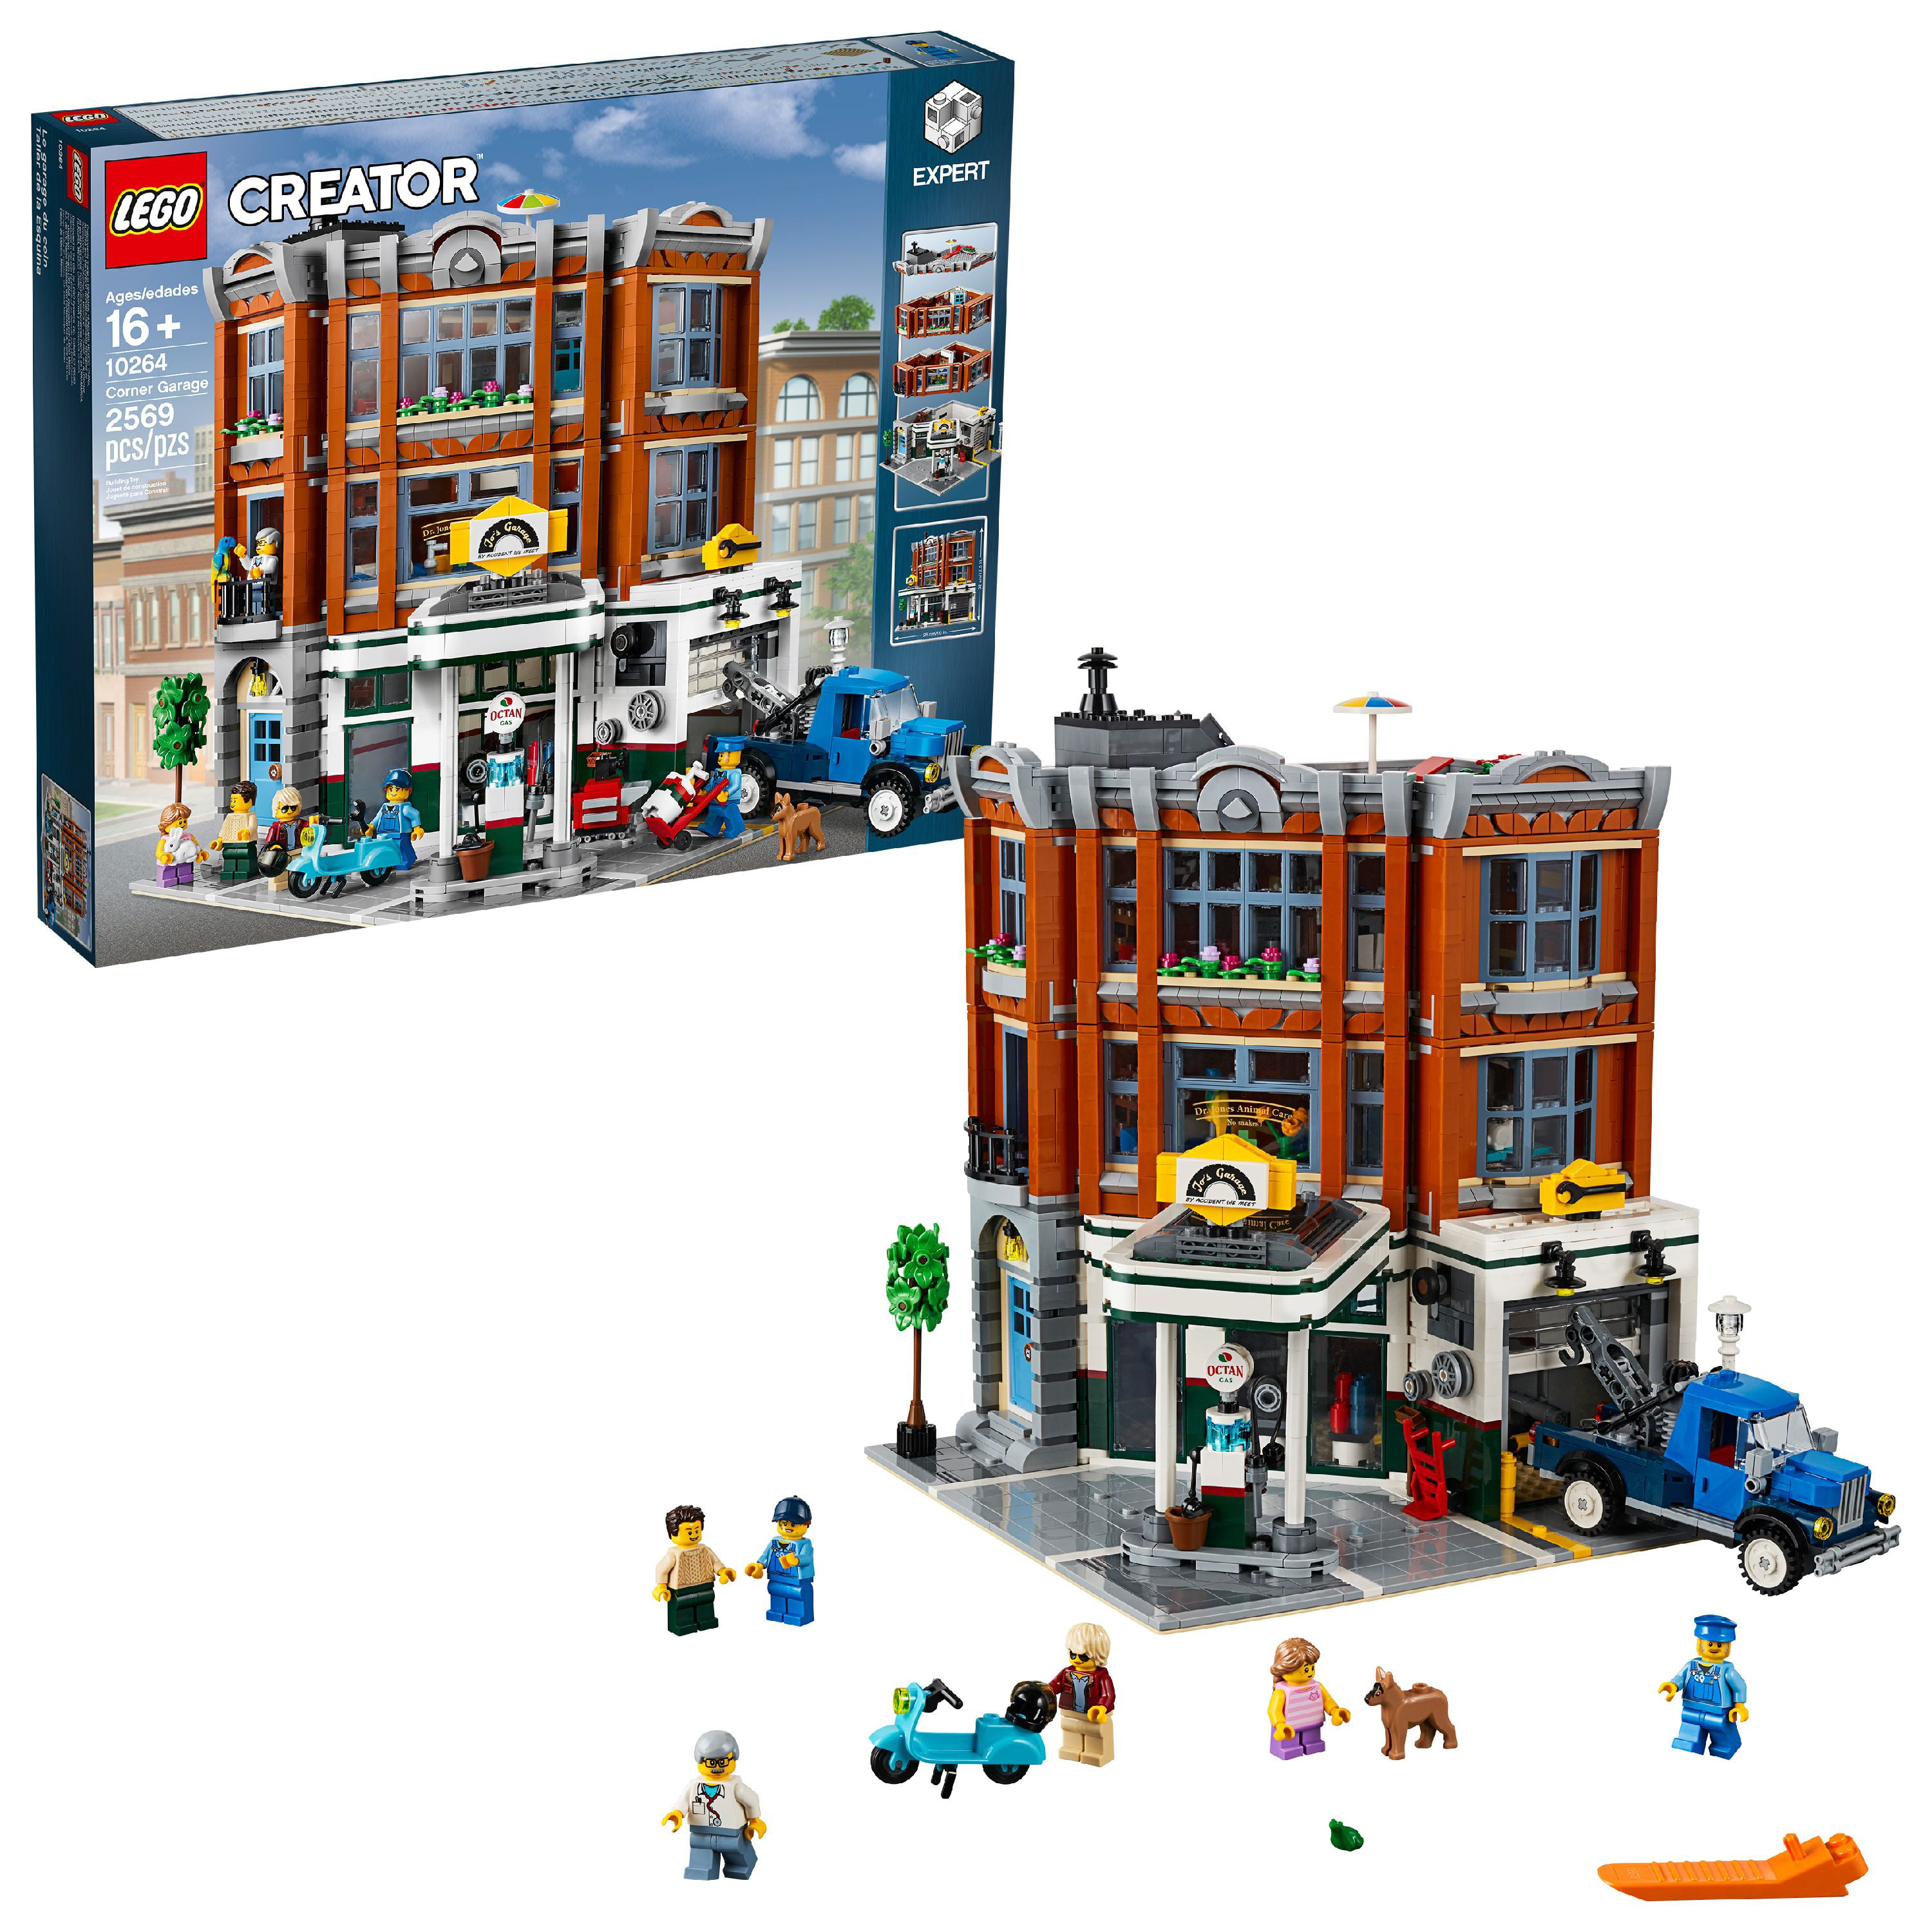 lego building set